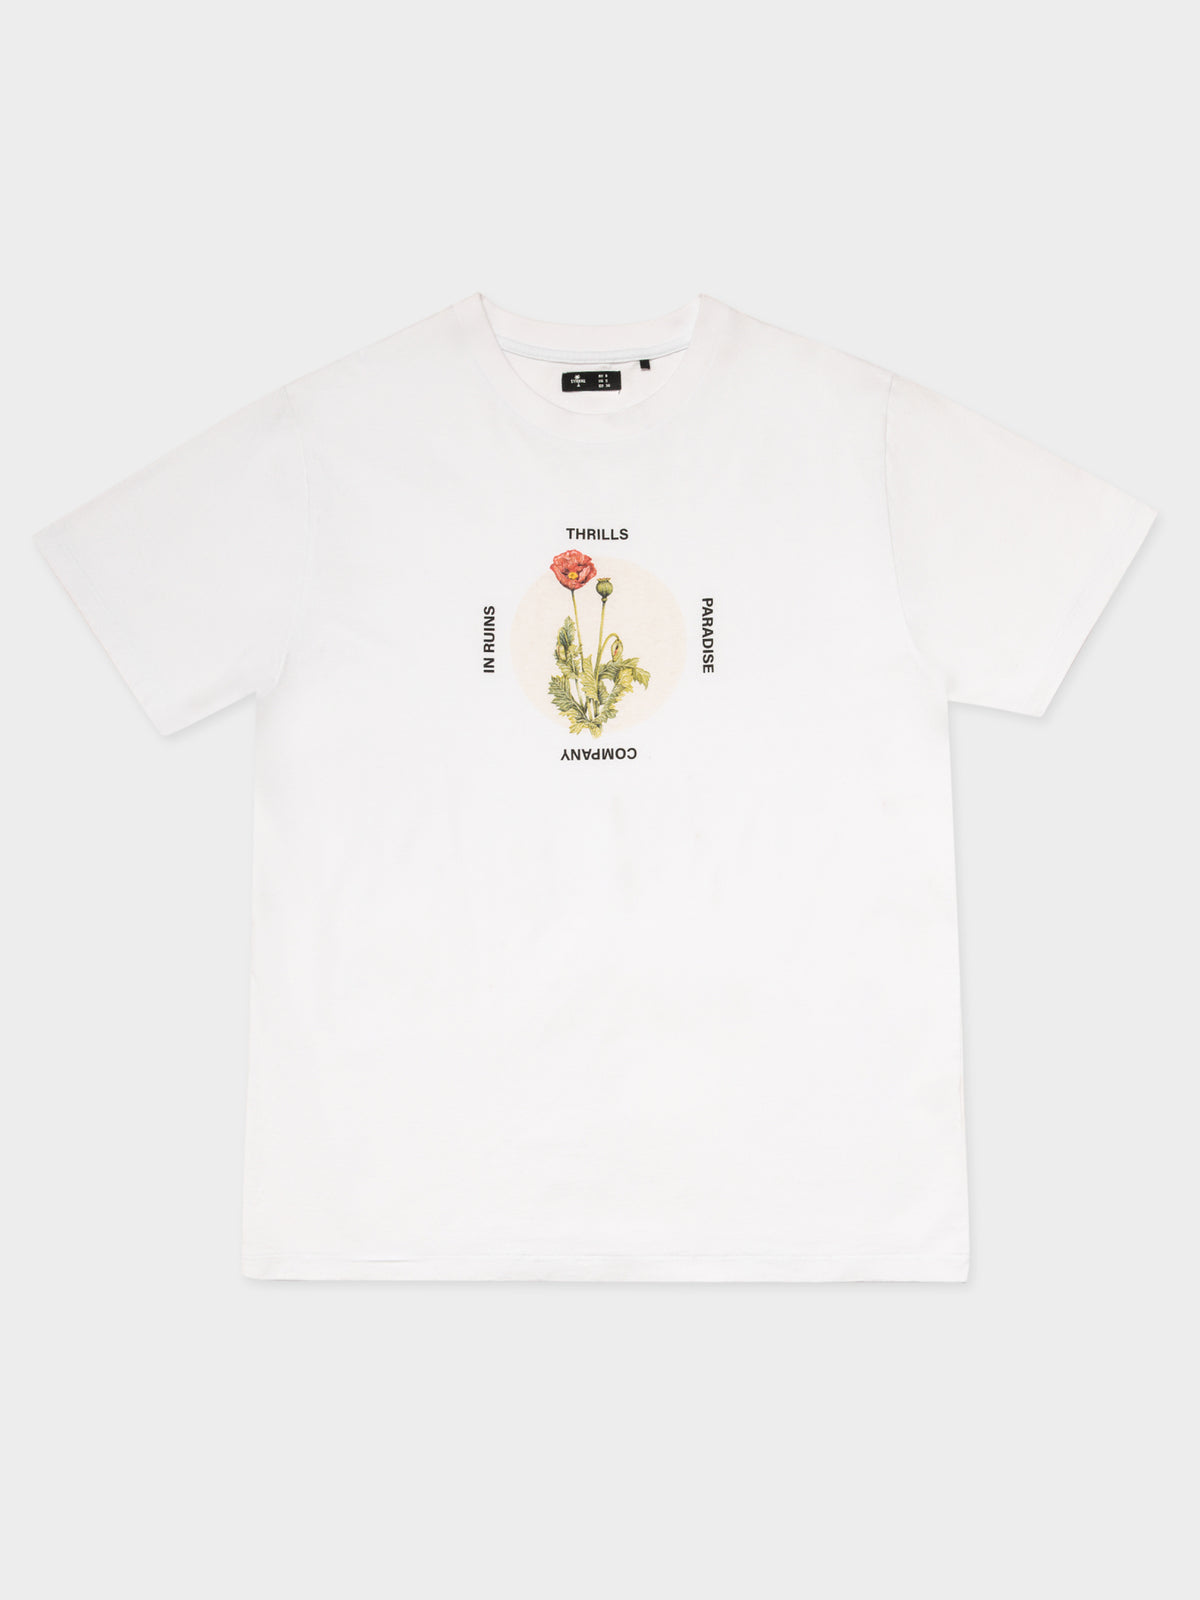 Modern Lover Merch Fit T-Shirt in White